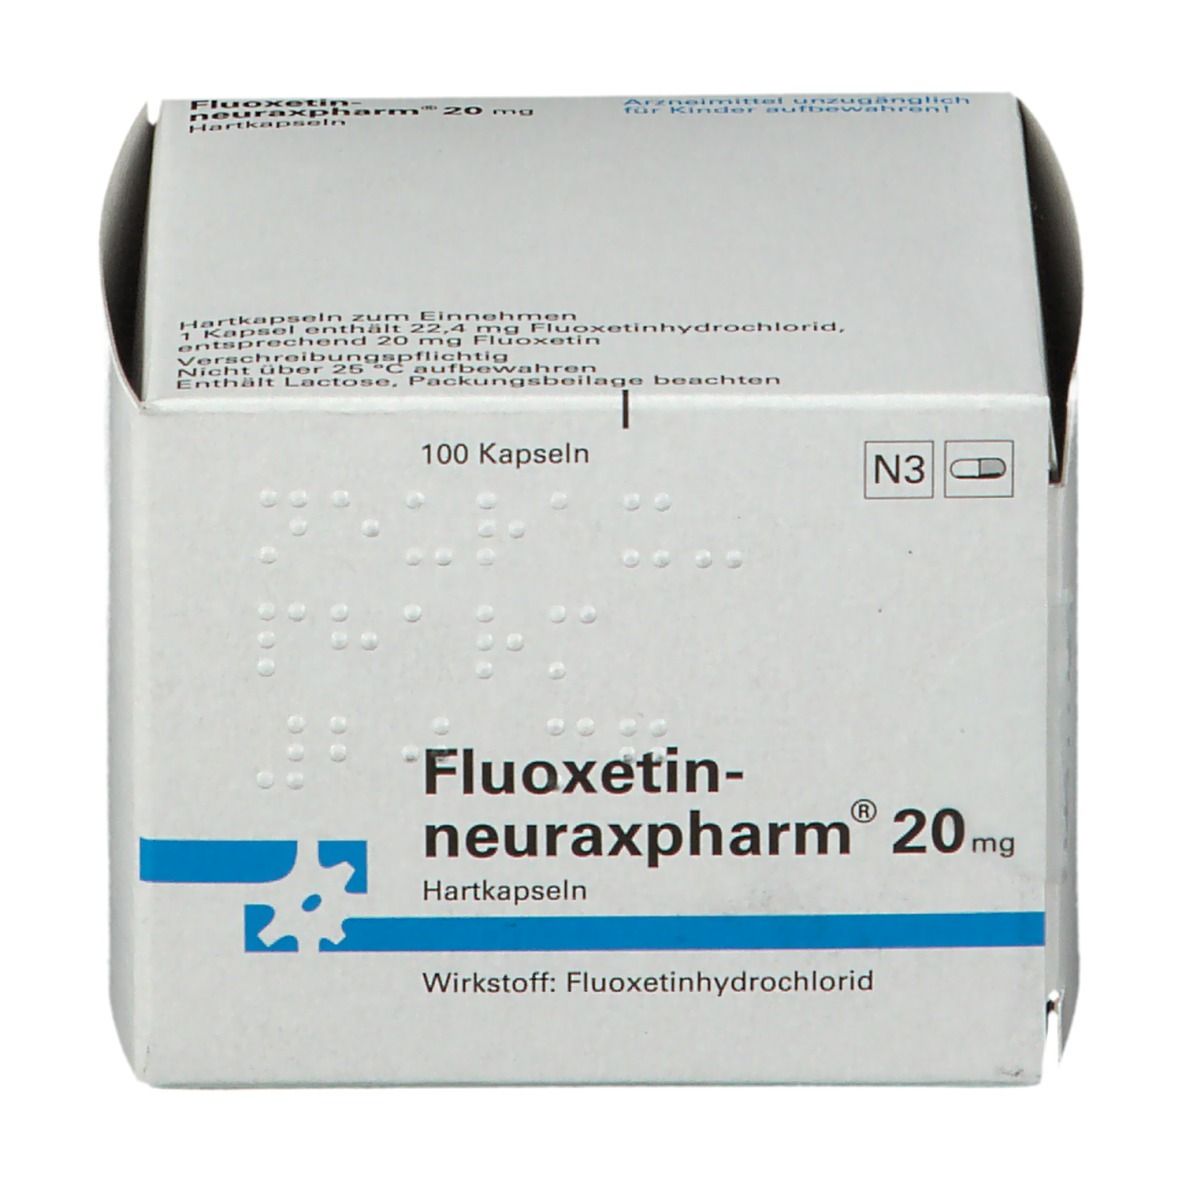 Fluoxetin-neuraxpharm® 20 mg